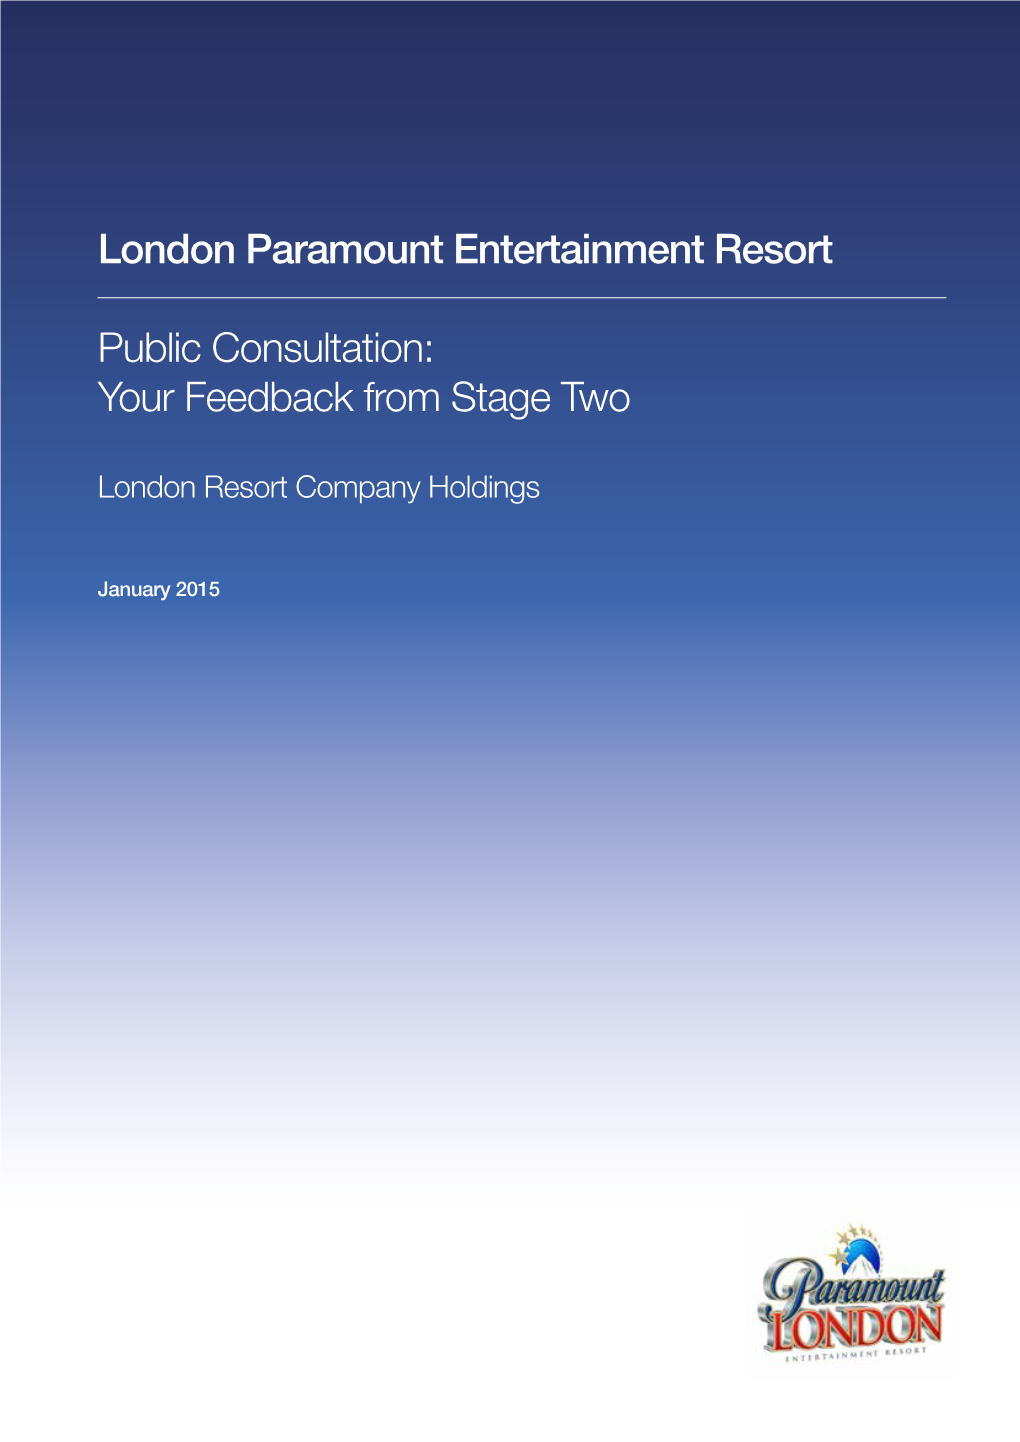 London Paramount Entertainment Resort